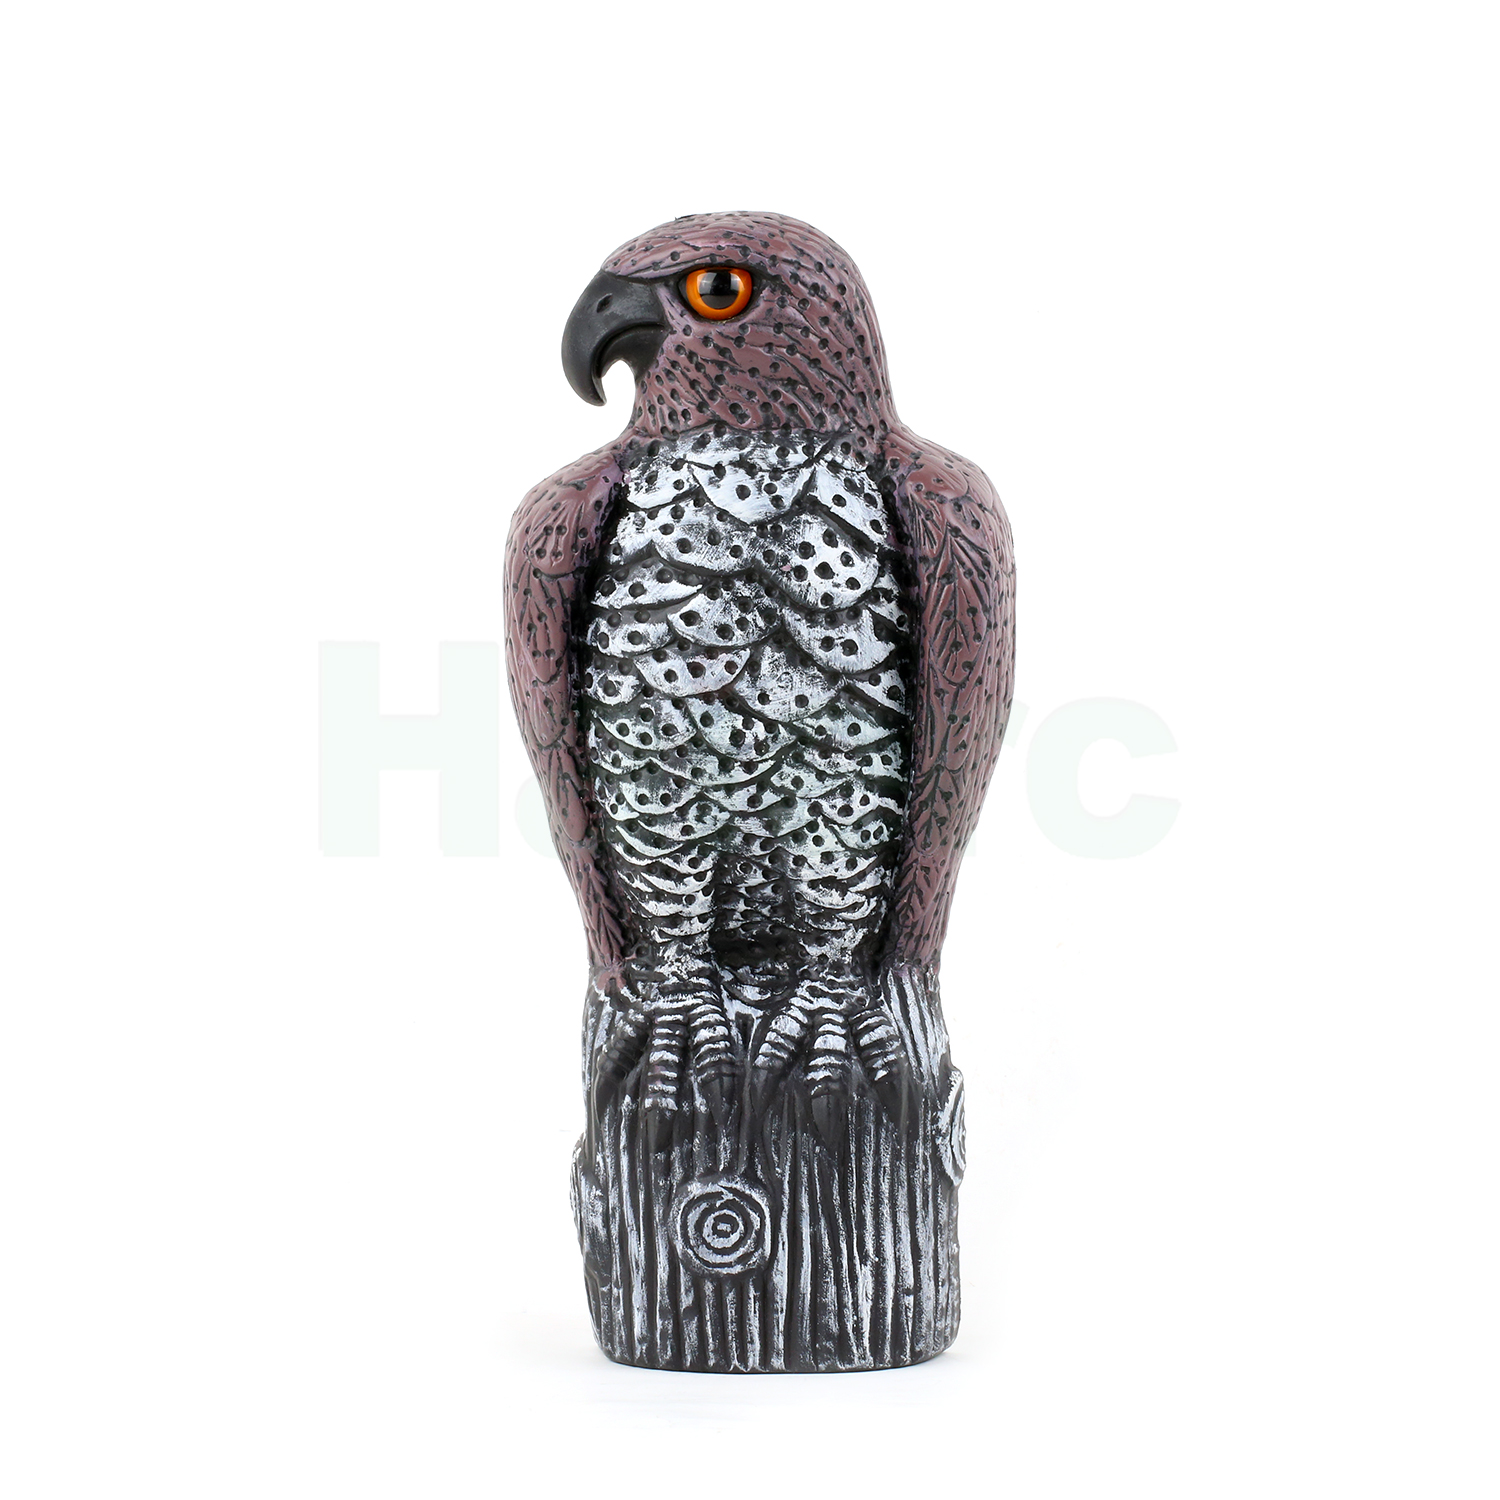 >Haierc outdoor pest bird control plastic garden ornaments garden bird scarer owl HC1640